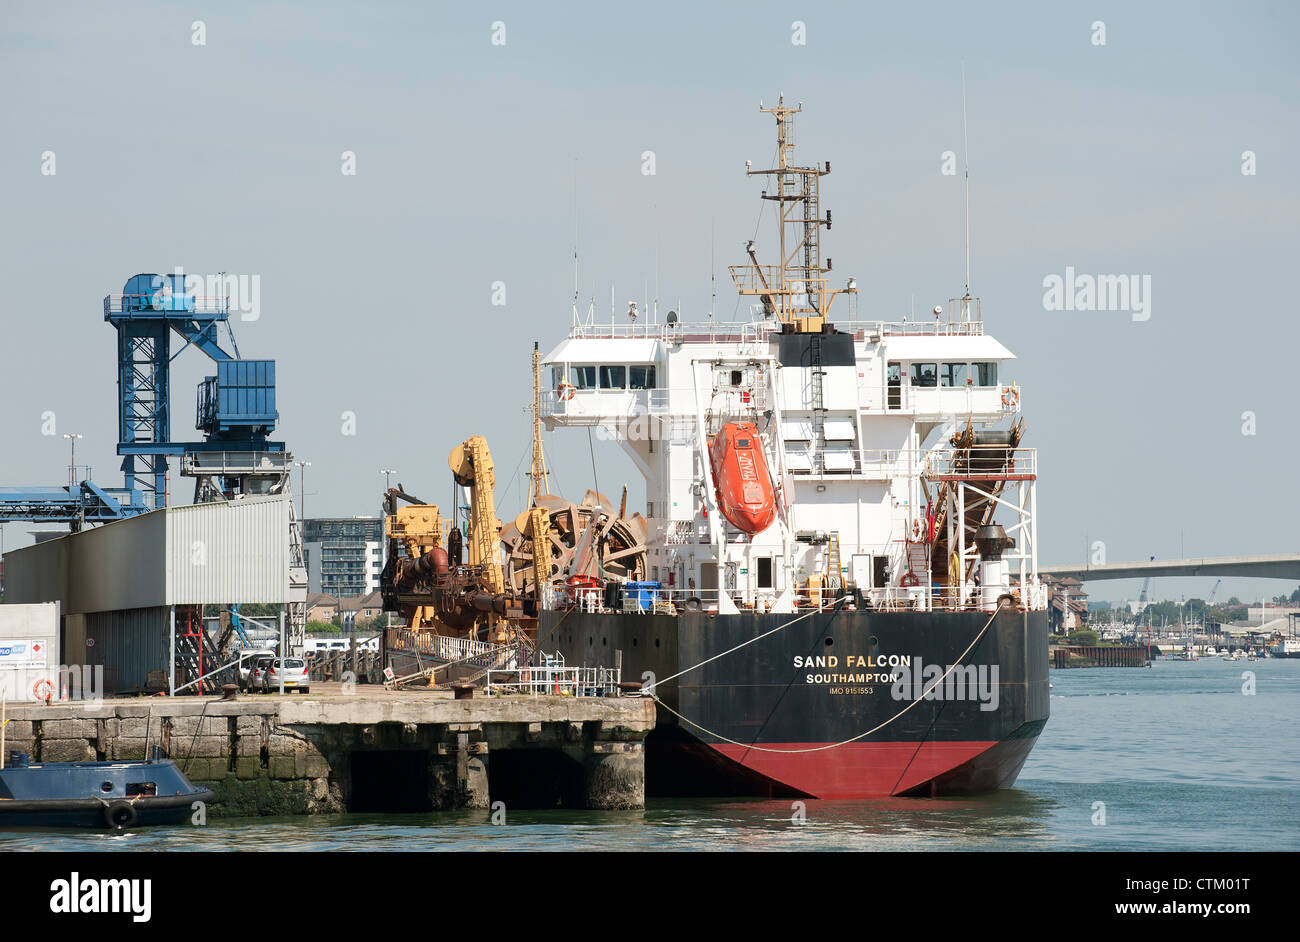 Port of Southampton England UK Sand Falcon alongside Stock Photo